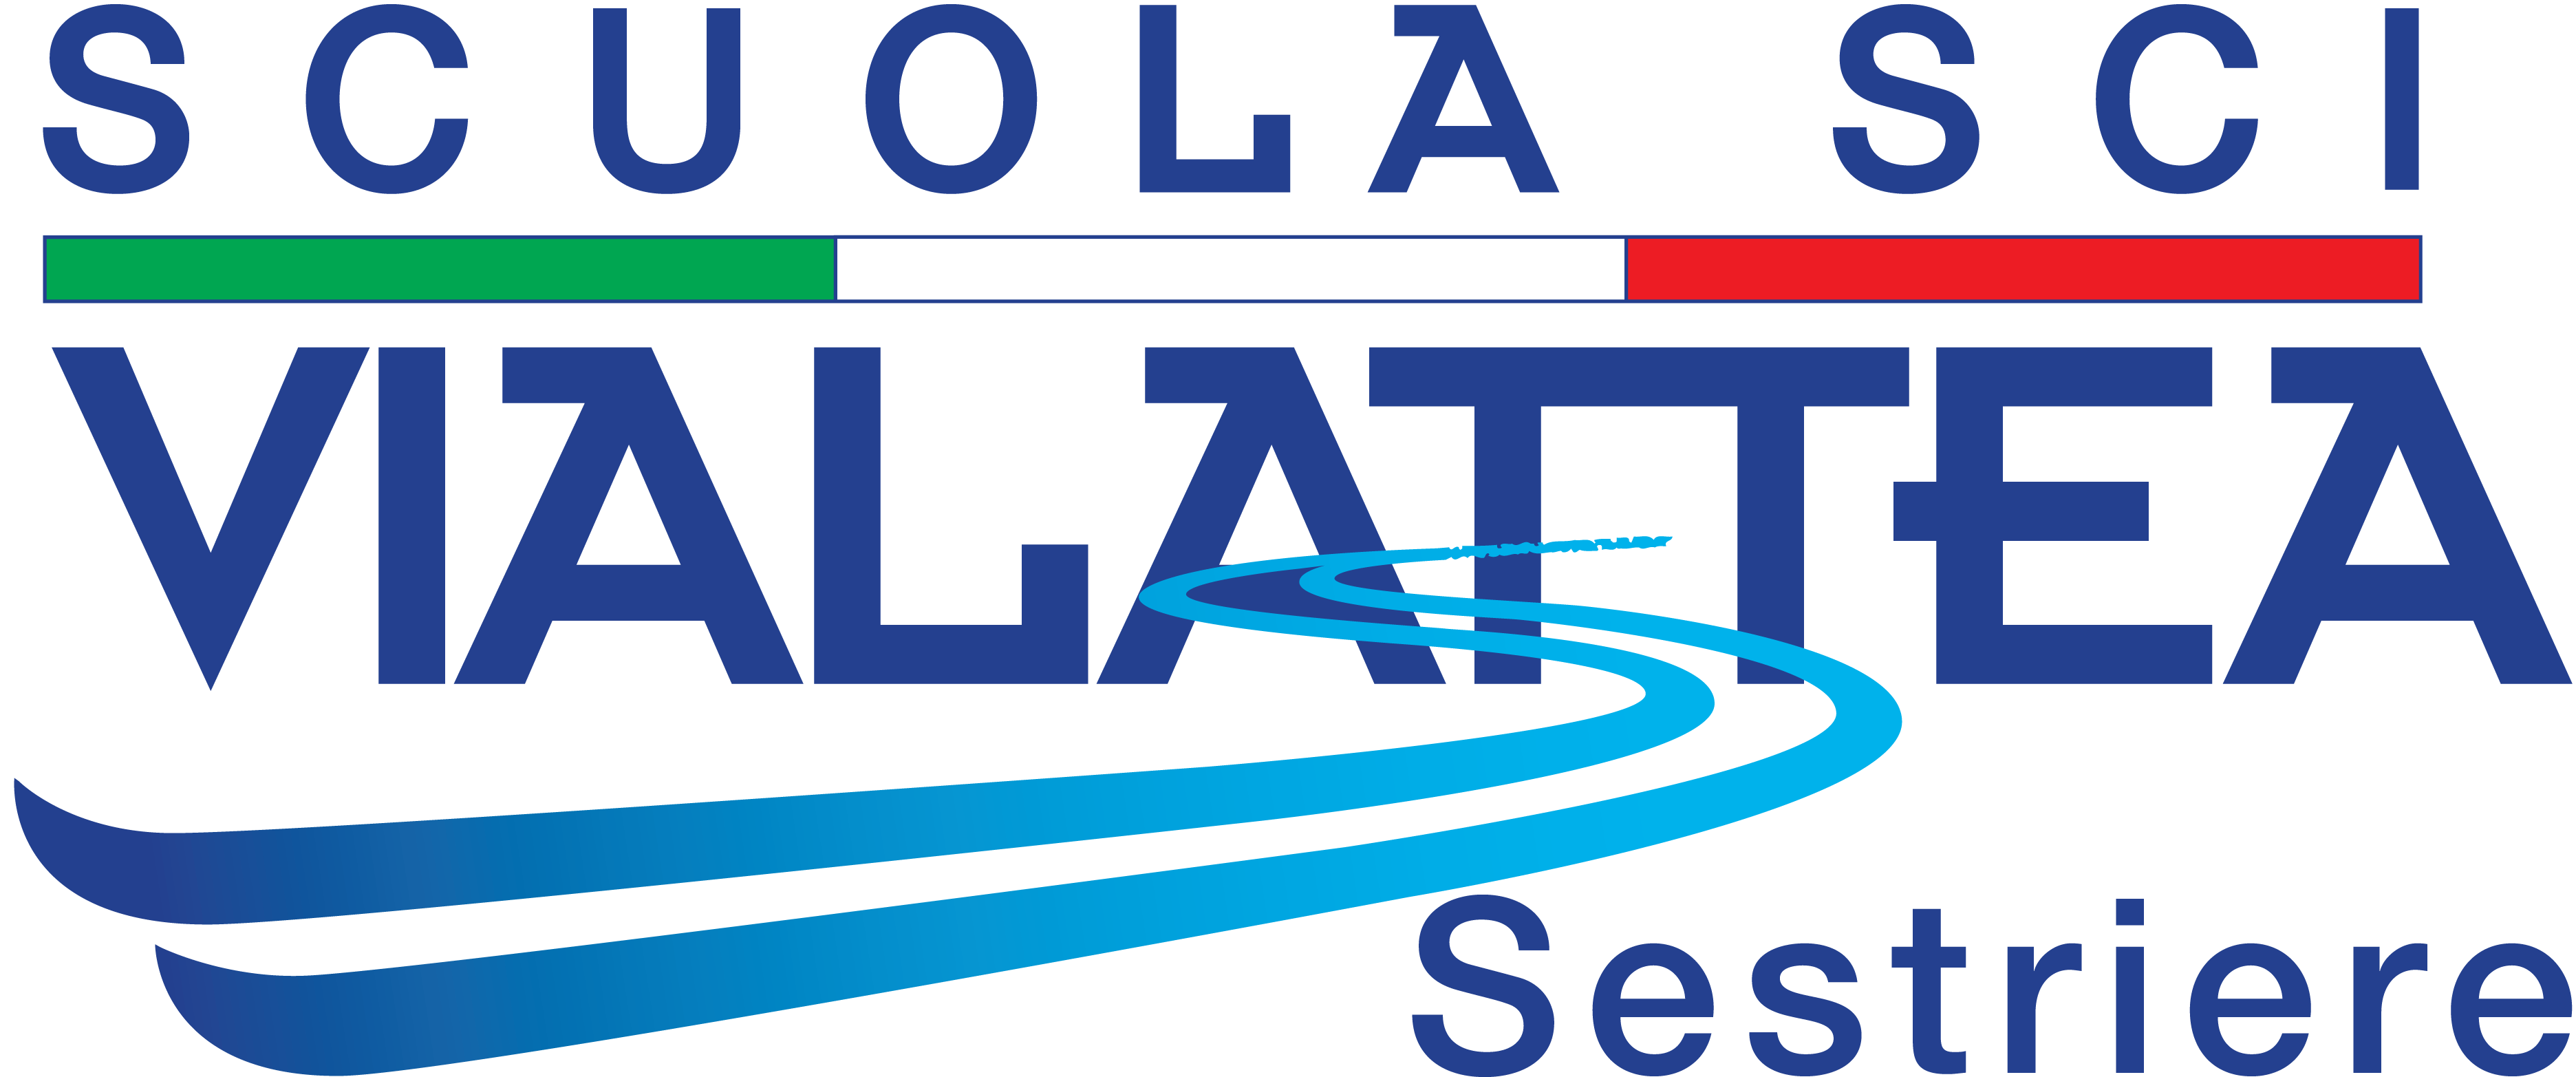 Contact us | Scuola Sci Vialattea